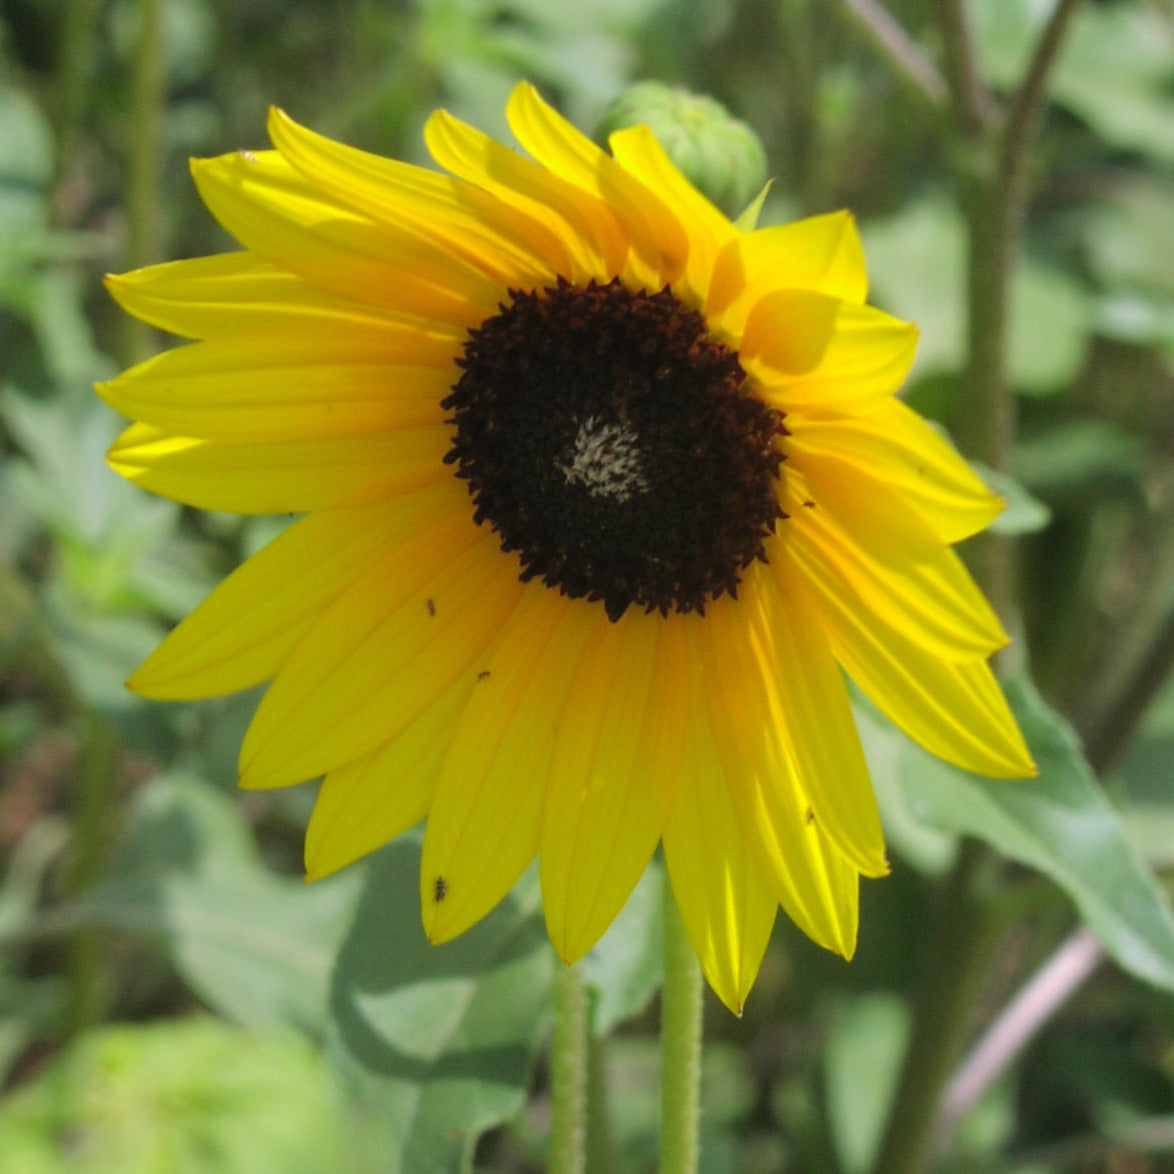 common sunflower close up